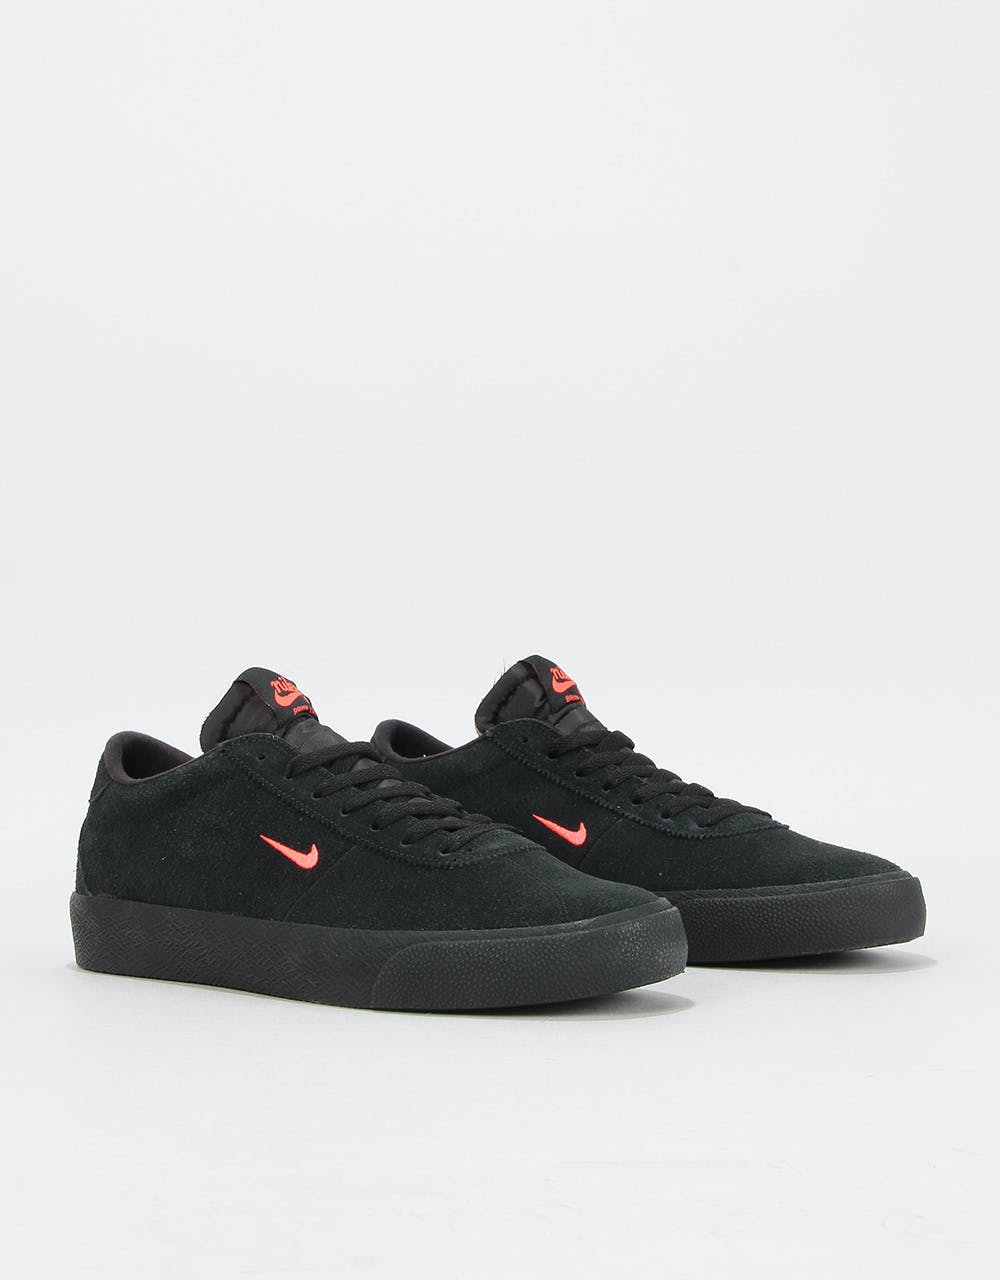 Nike SB Zoom Bruin Skate Shoes - Black/Bright Crimson-Black